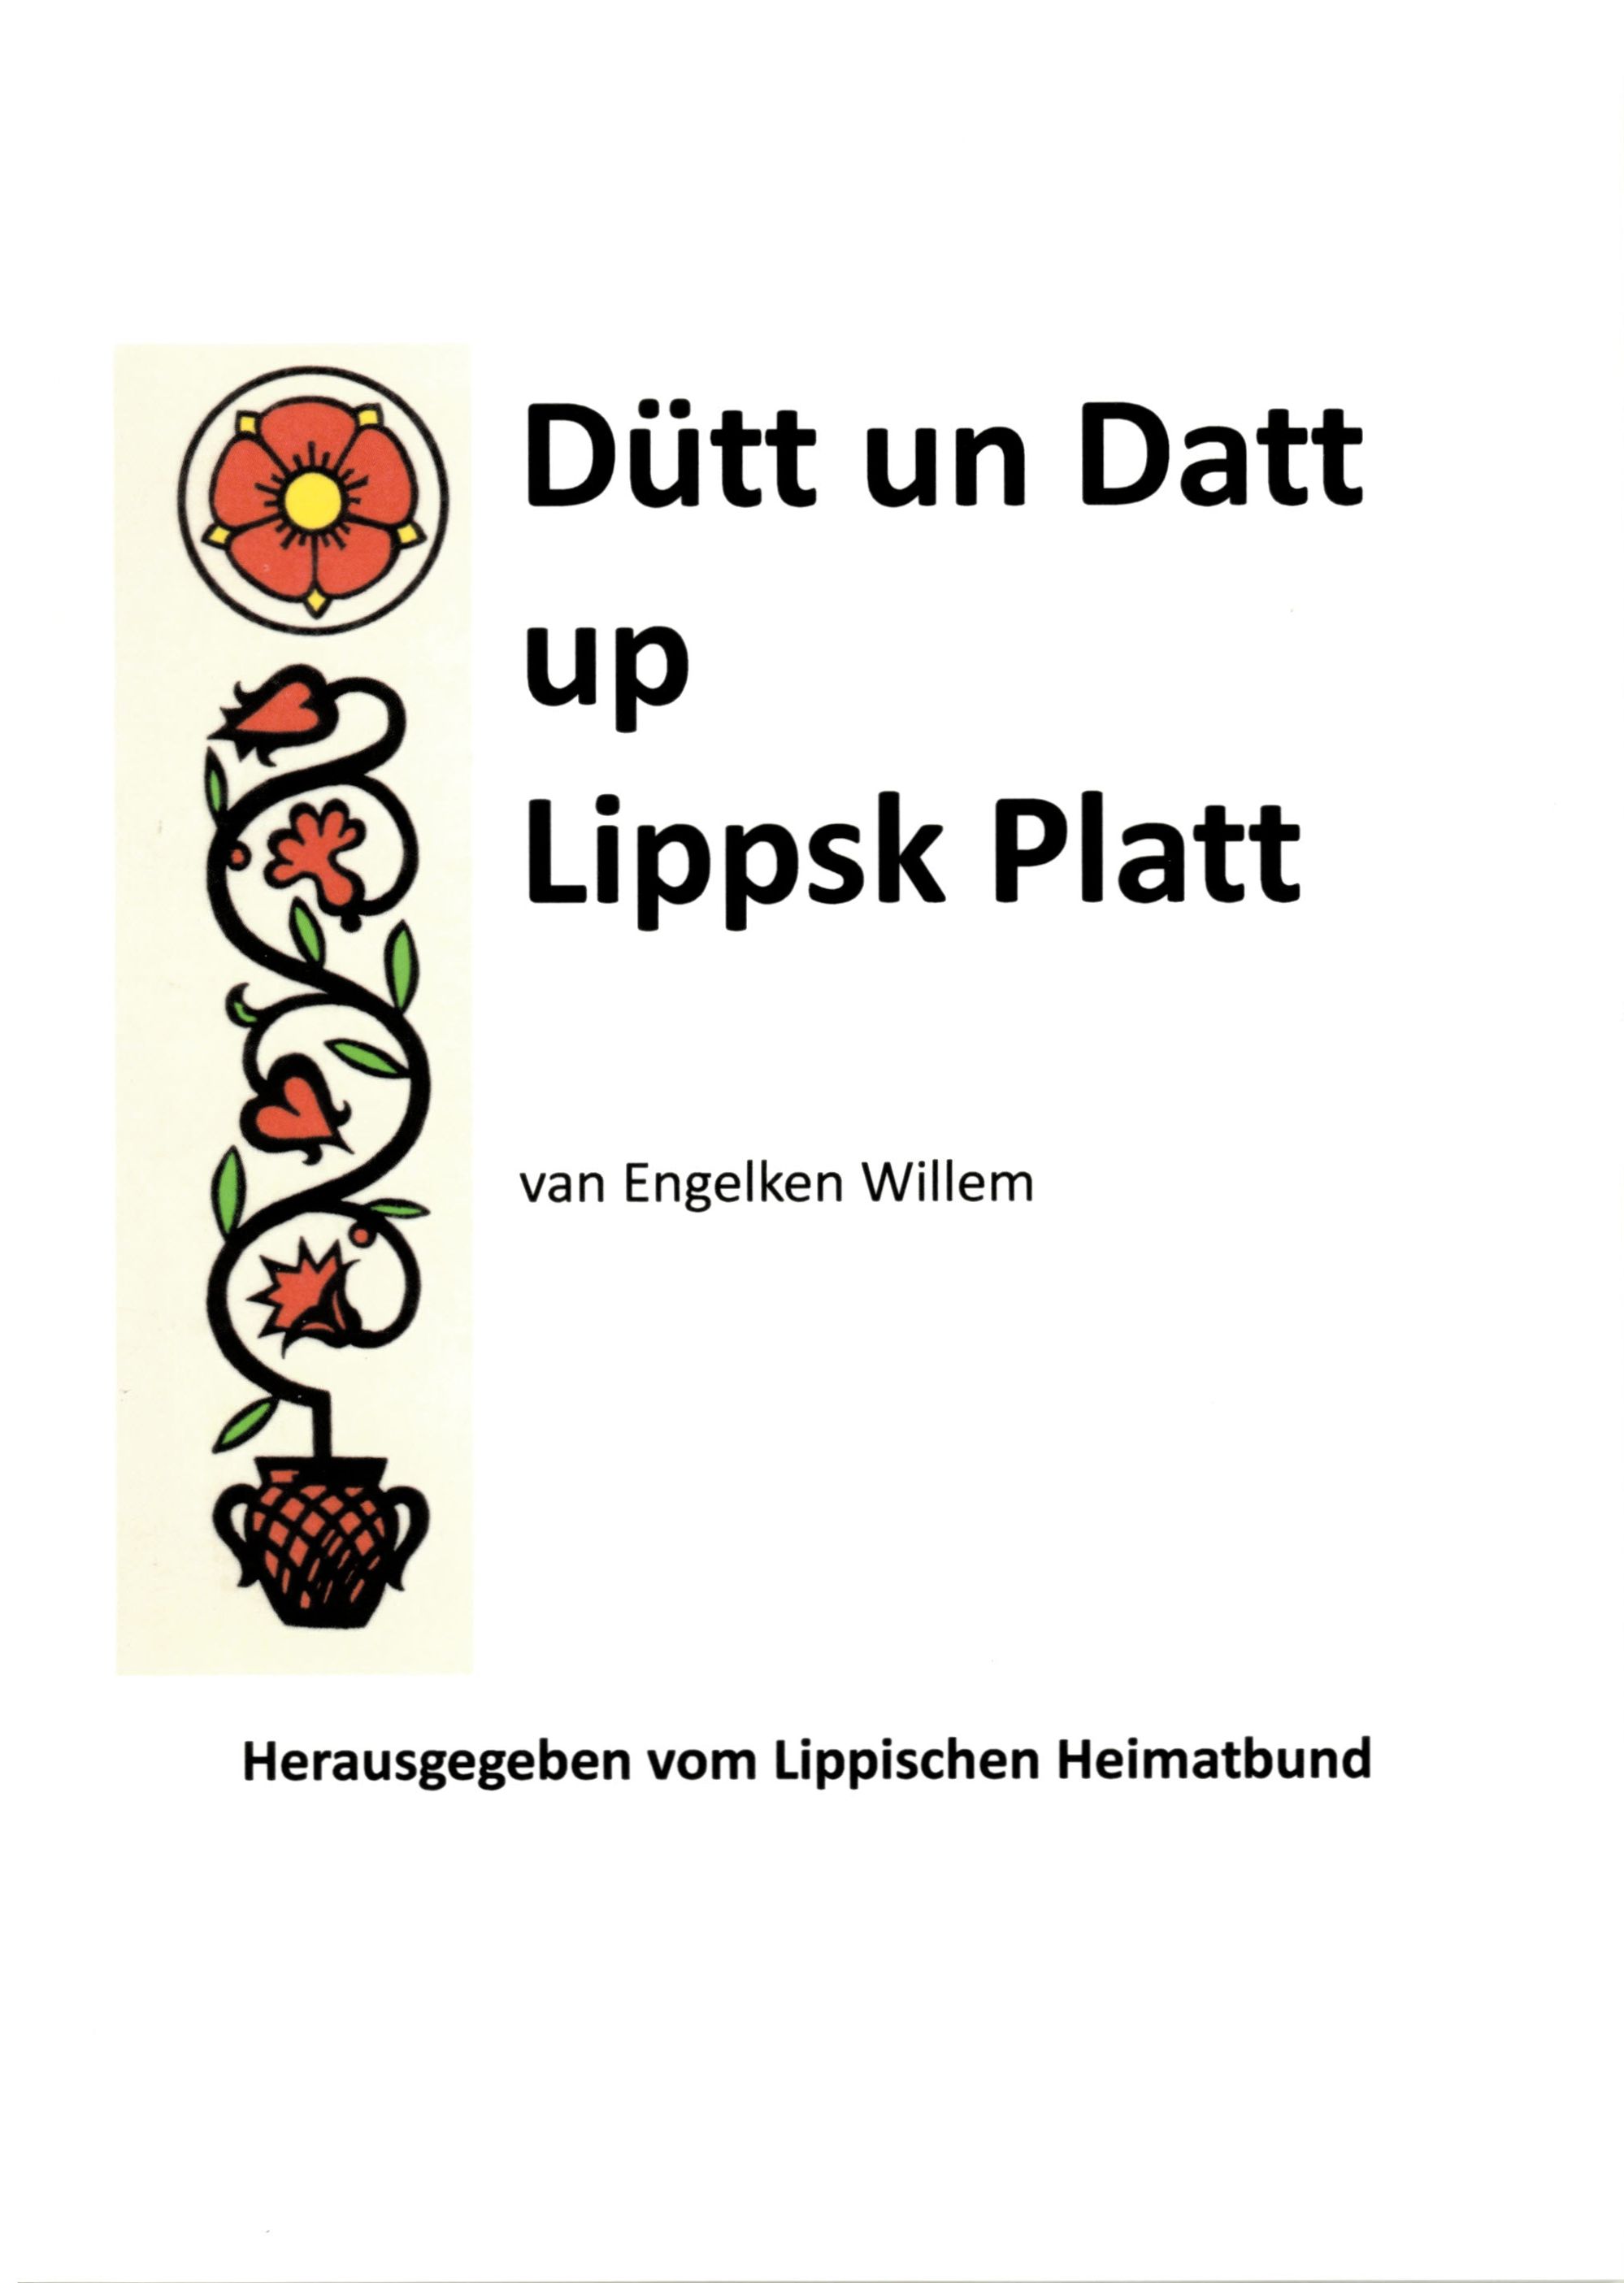 Dütt un Datt up Lippsk Platt